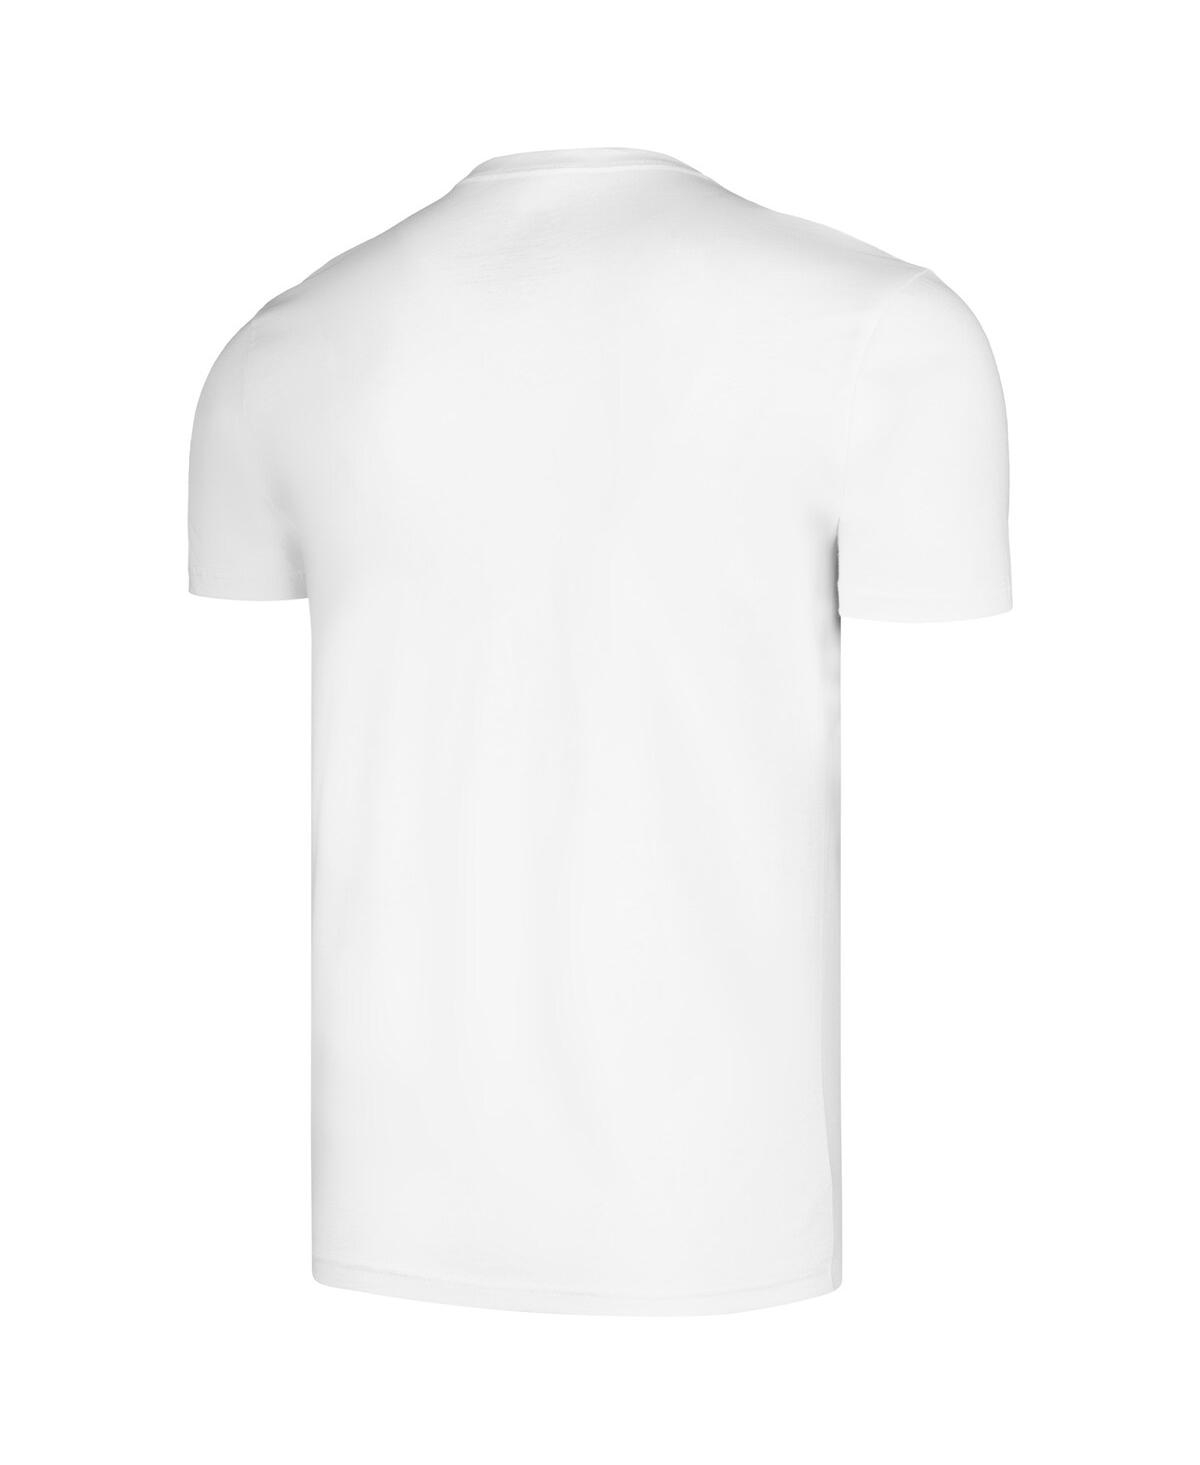 Shop Global Merch Men's White Slayer Drip Logo T-shirt